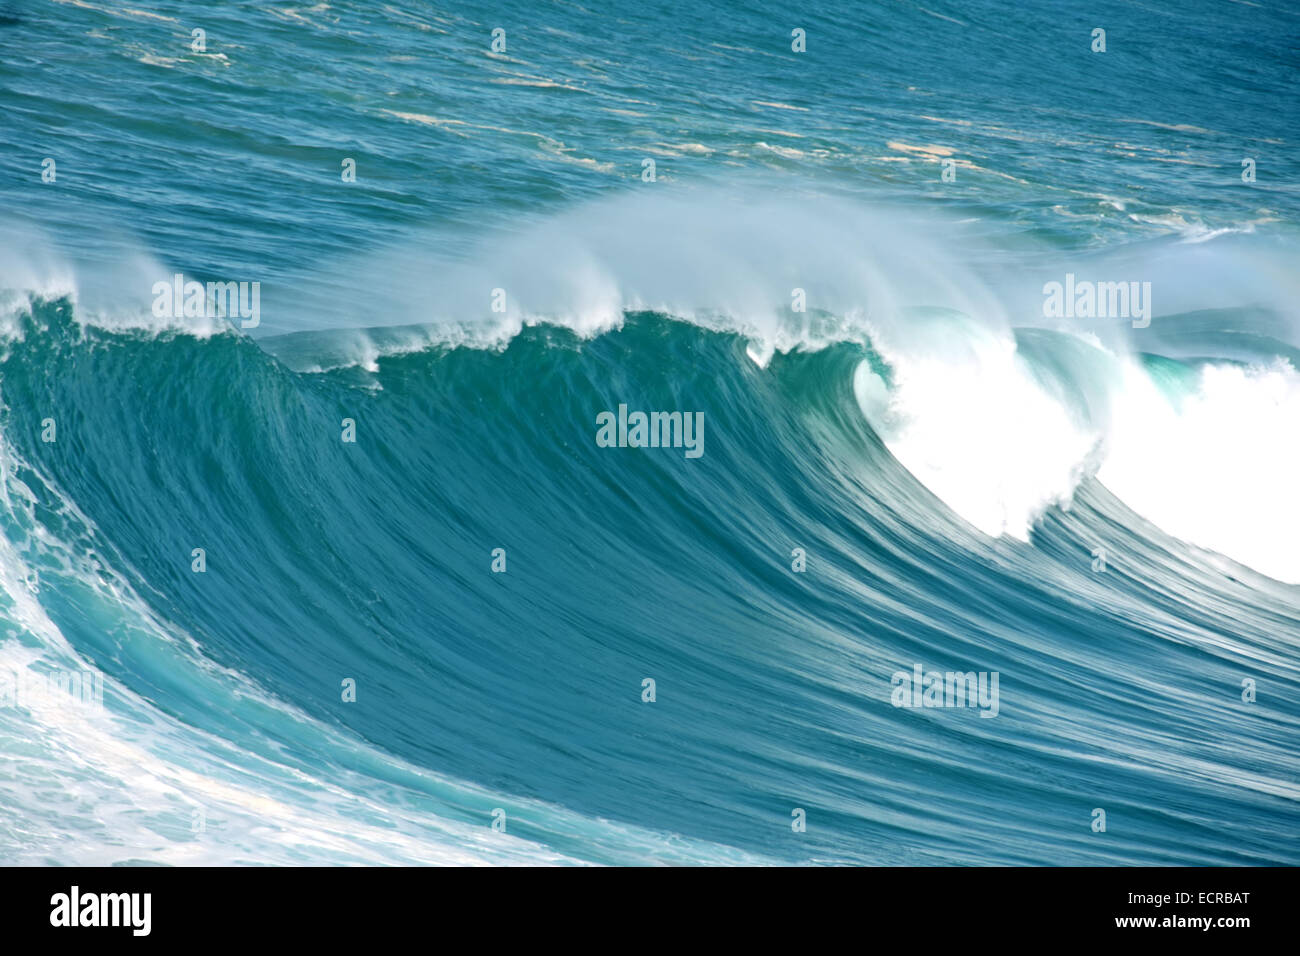 Enorme ondata nell'oceano atlantico Foto Stock